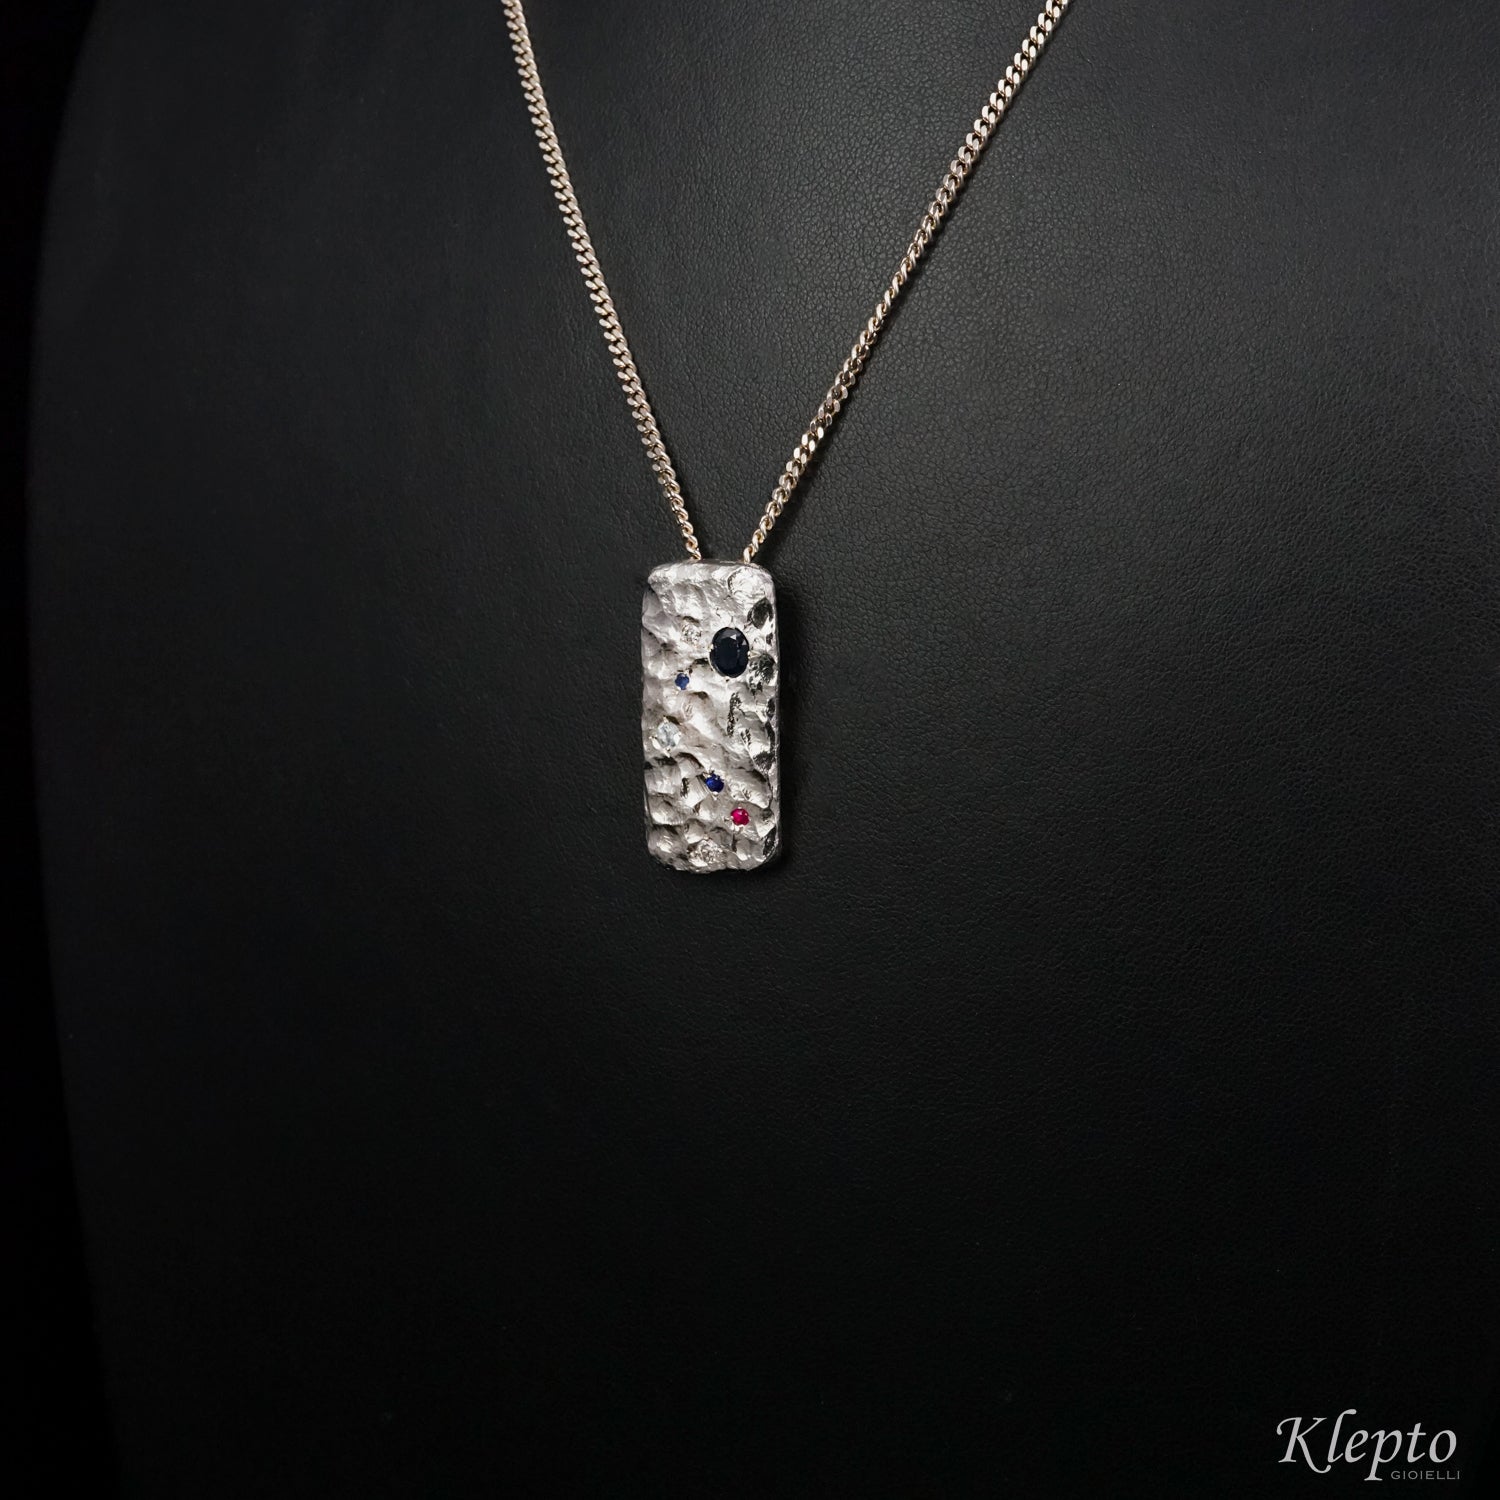 Silnova® "Lunare" Silver Pendant with Sapphires, Ruby, Aquamarine and Diamond